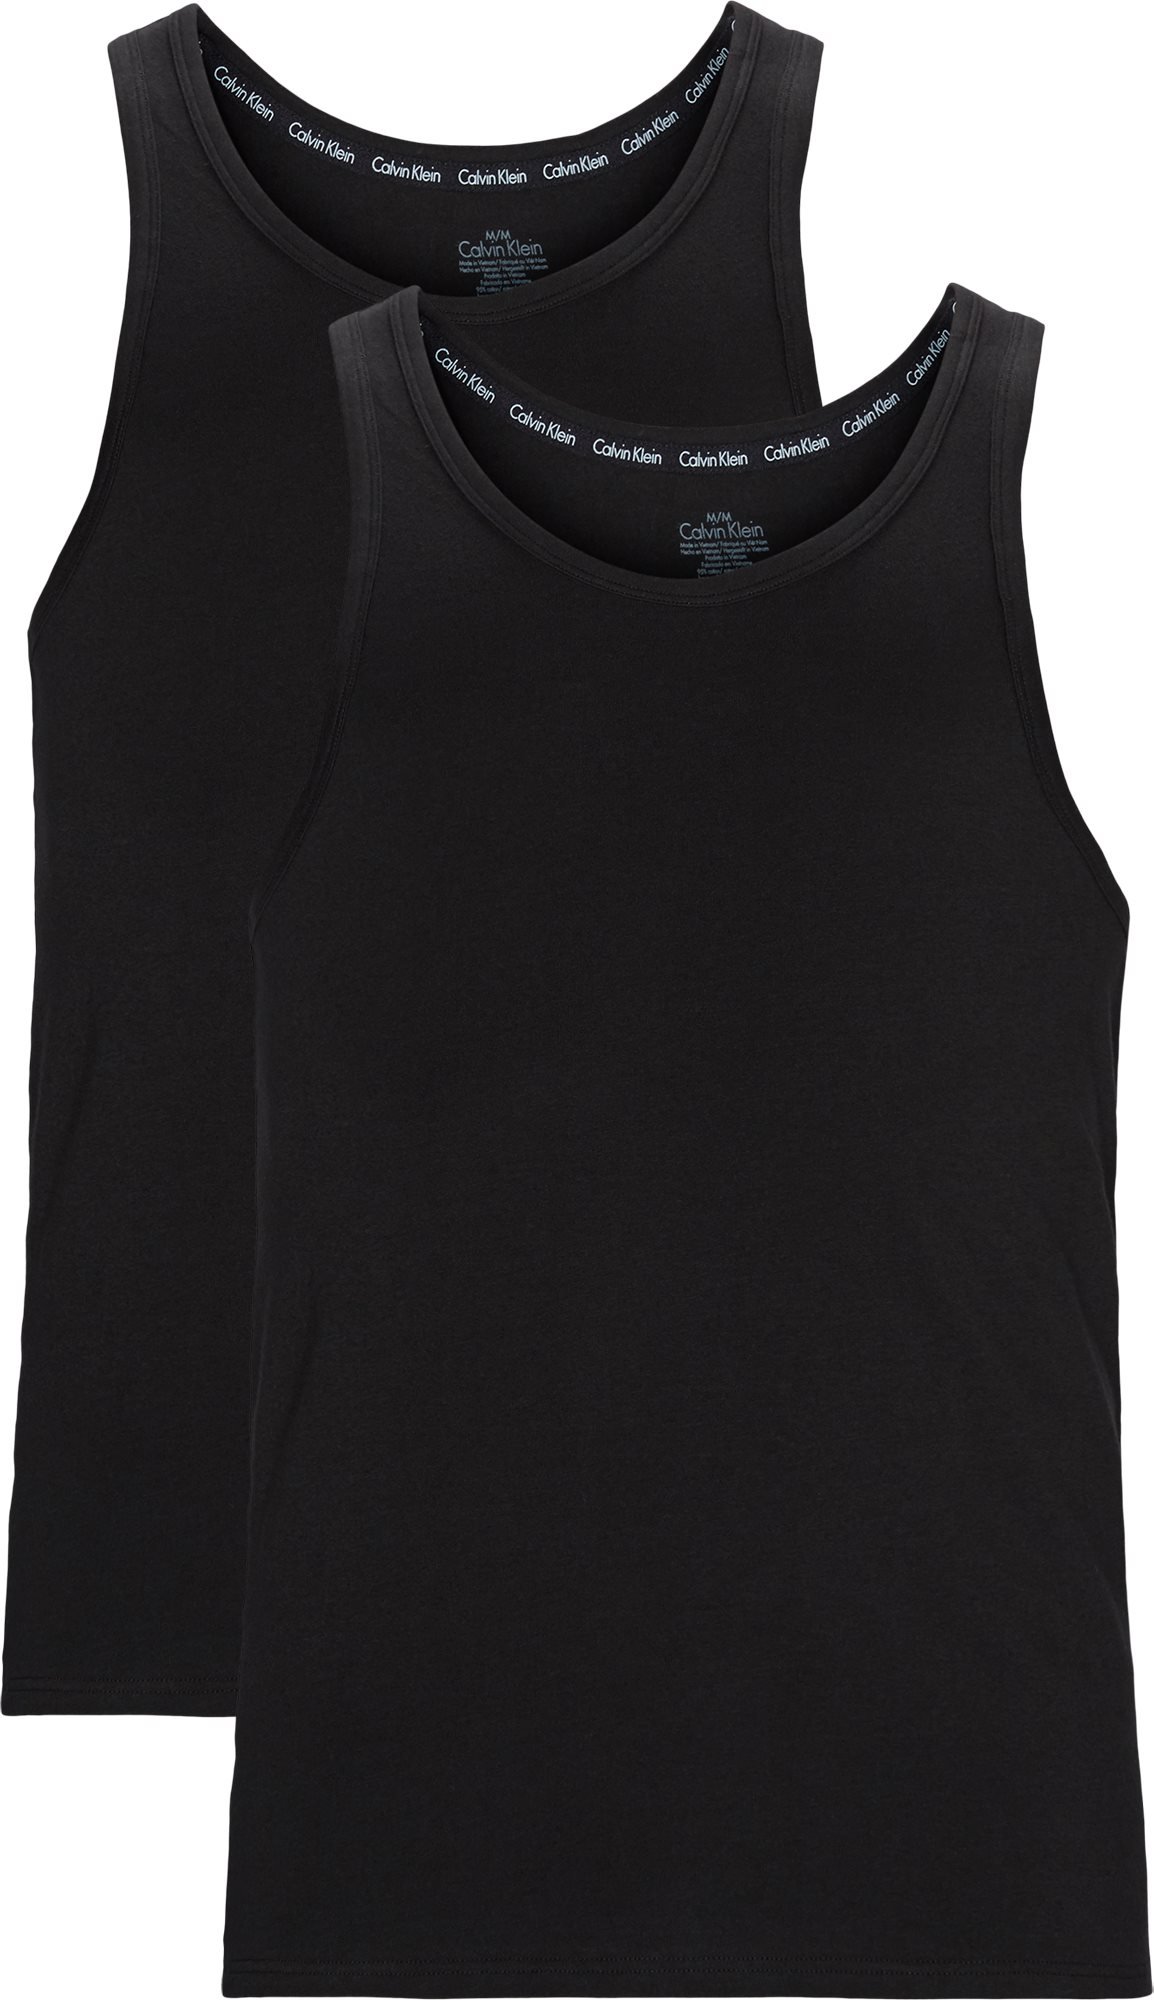 2-Pack Tanktops - T-shirts - Modern fit - Black